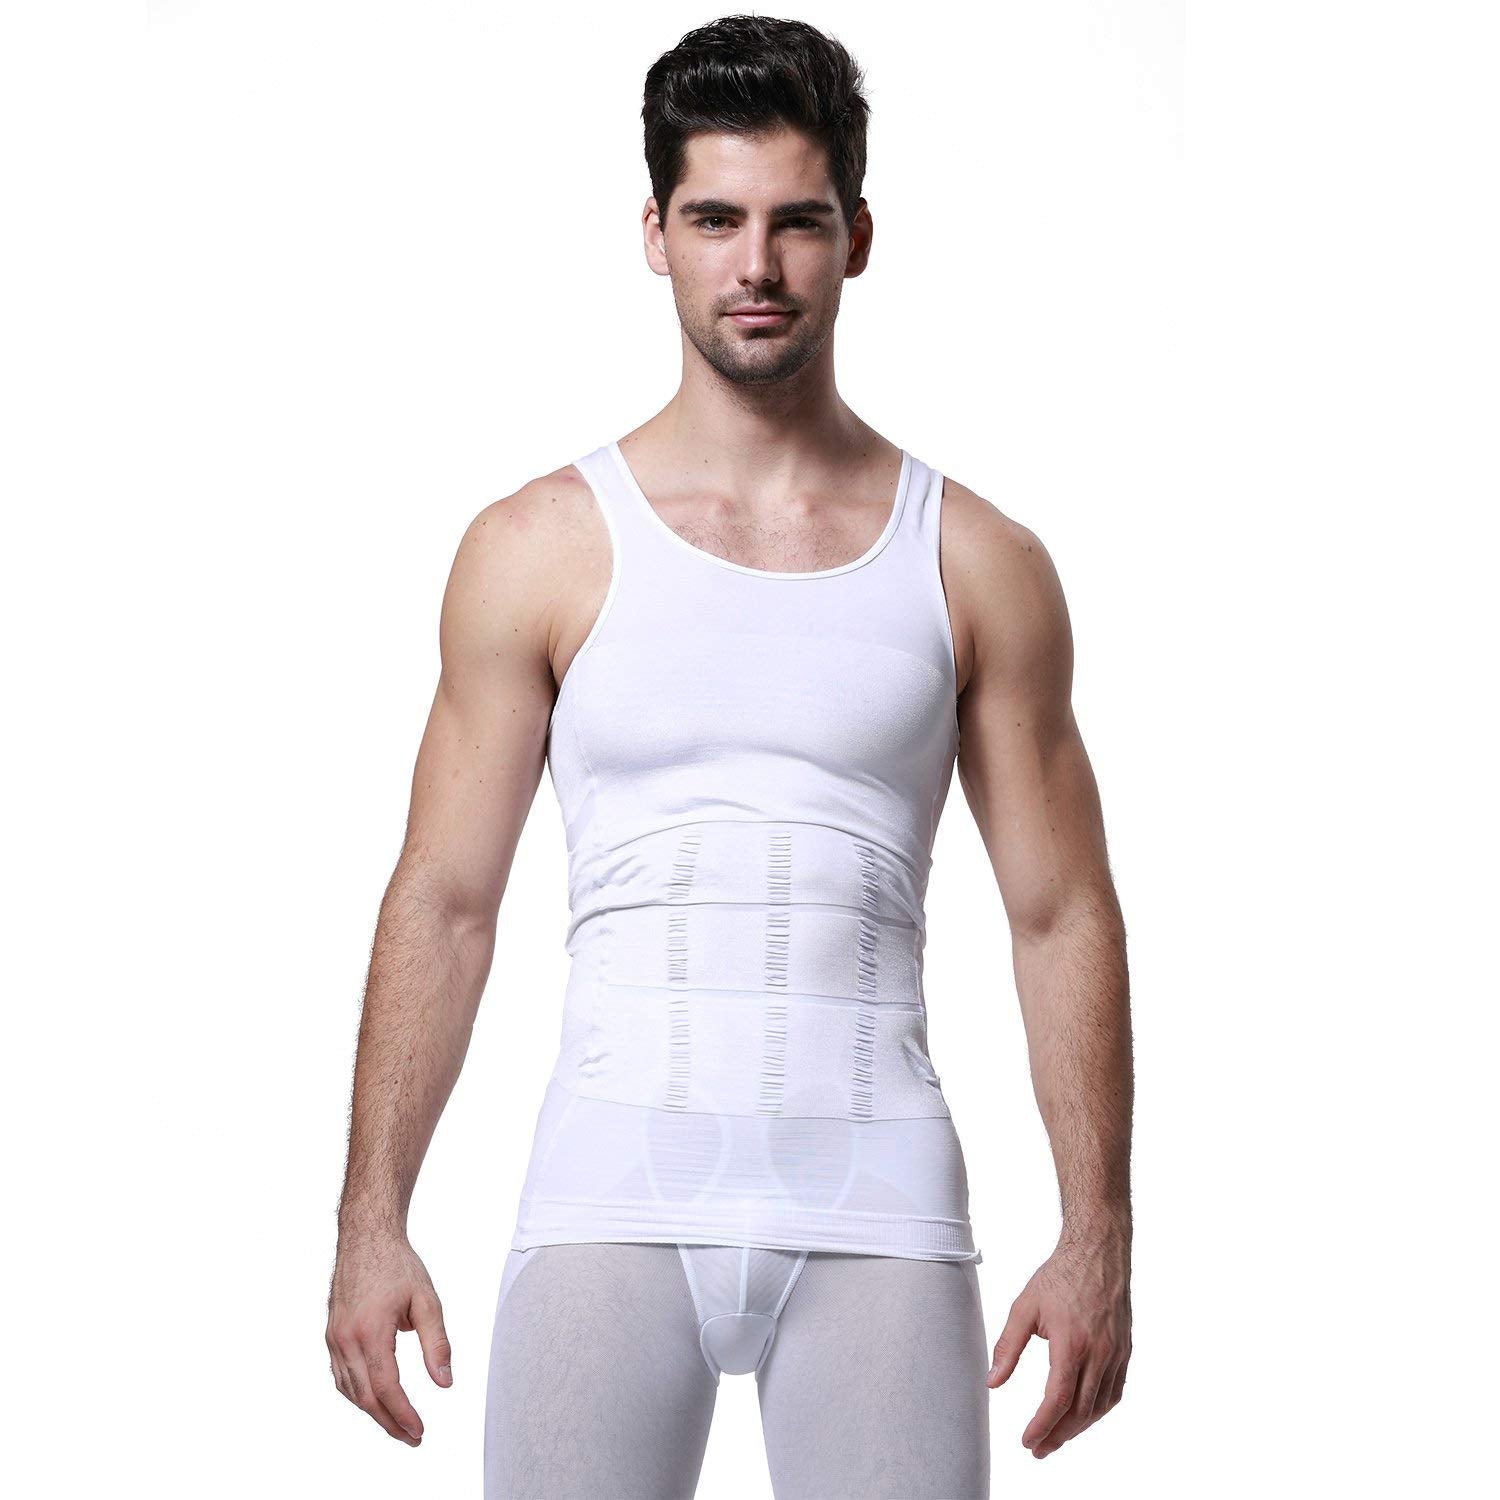  Eleady Mens Slimming Body Shaper Vest Compression